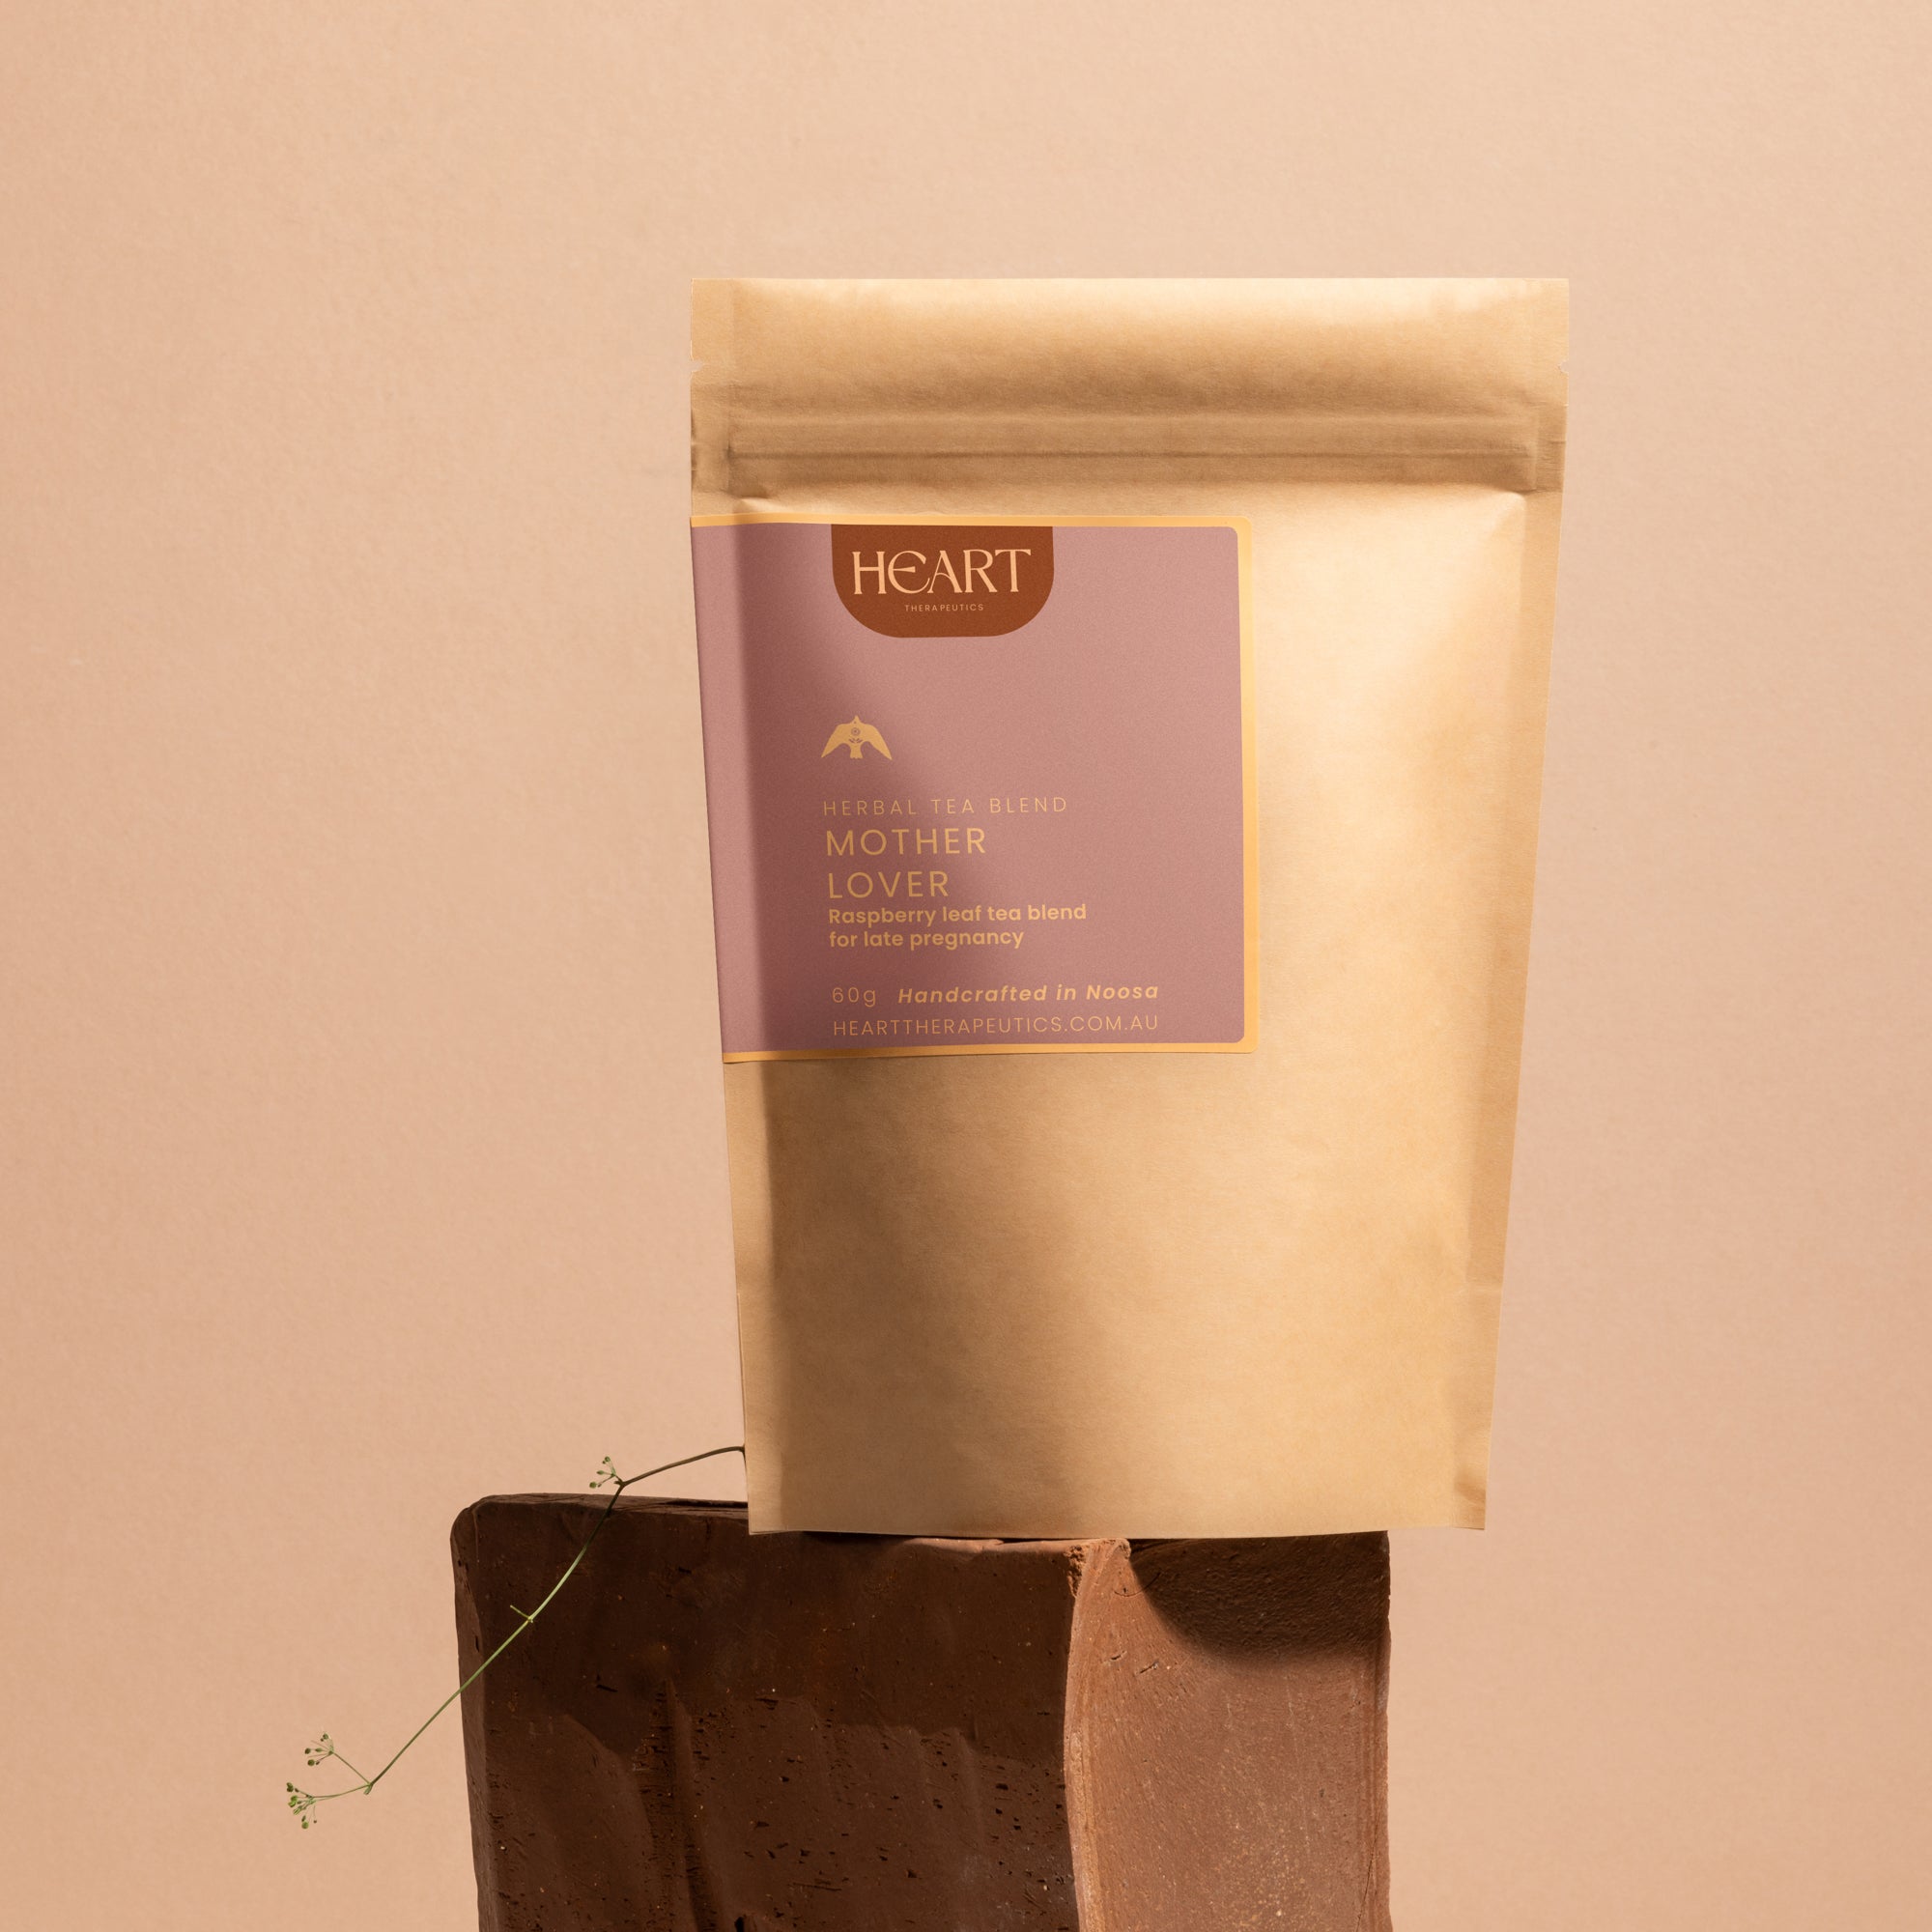 biodegradable bag of herbal tea for pregnancy